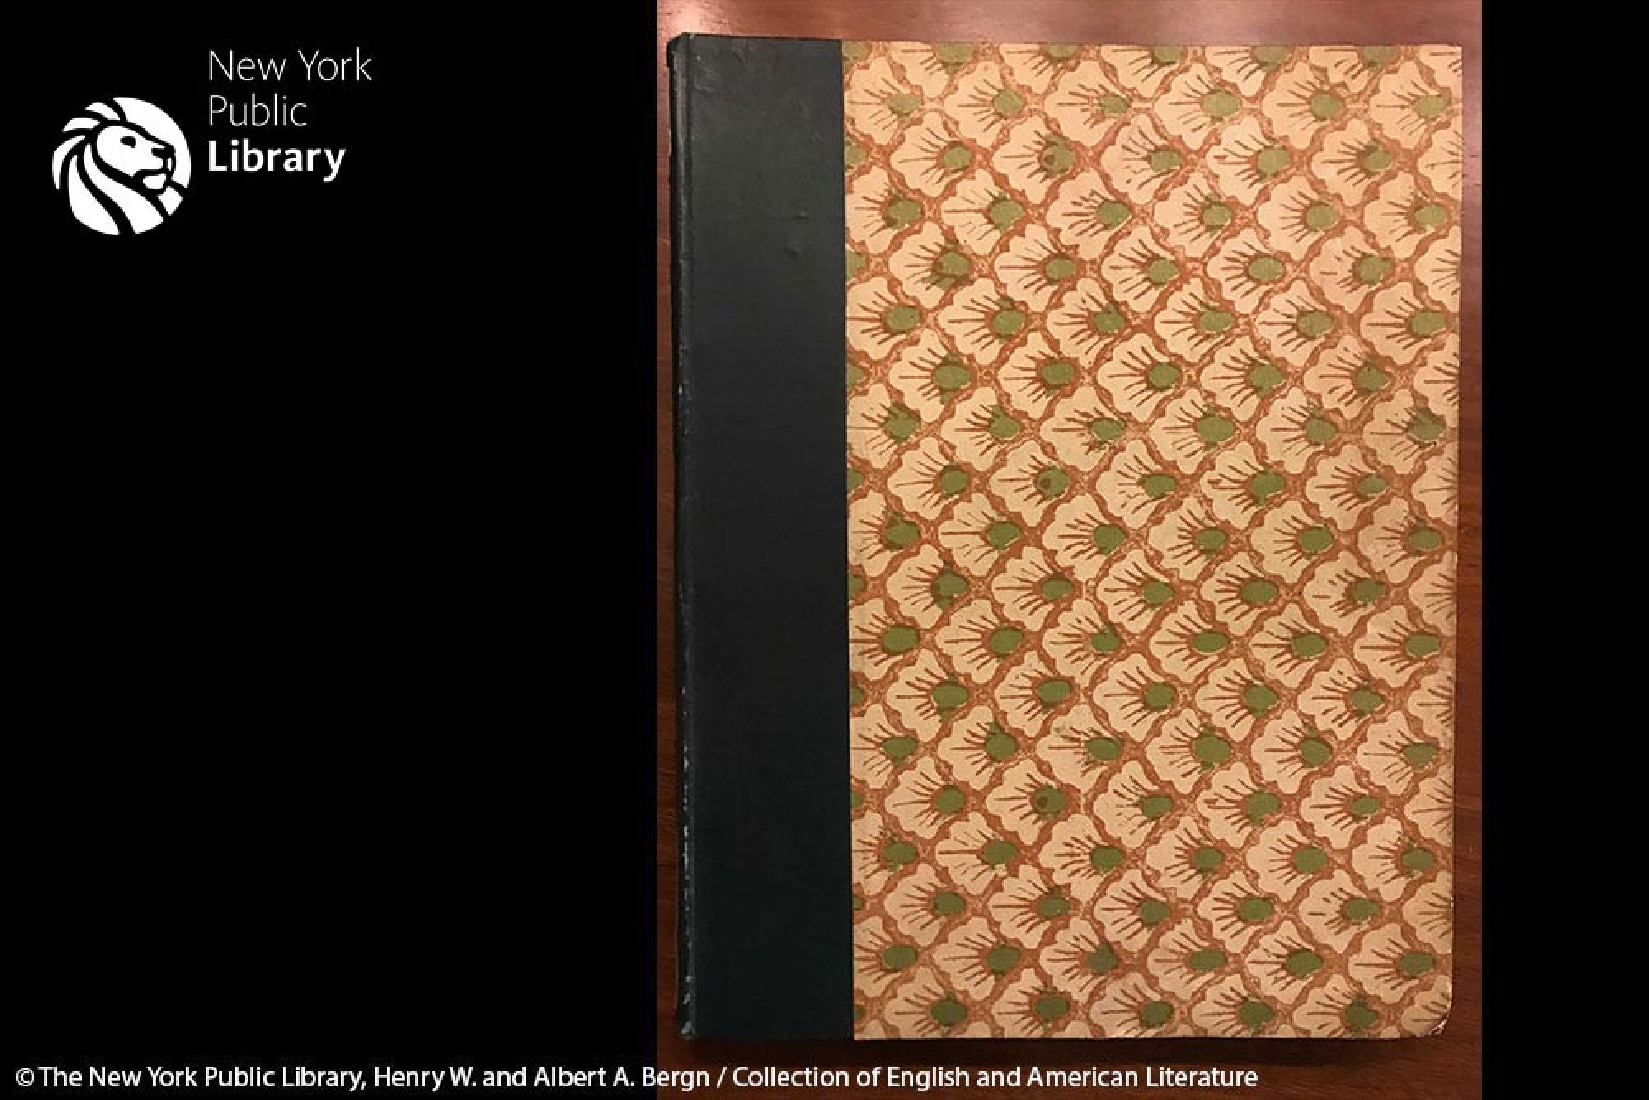 Paperblanks Virginia Woolfs, The Waves (Volume 3) Midi 18X13 lined notebook